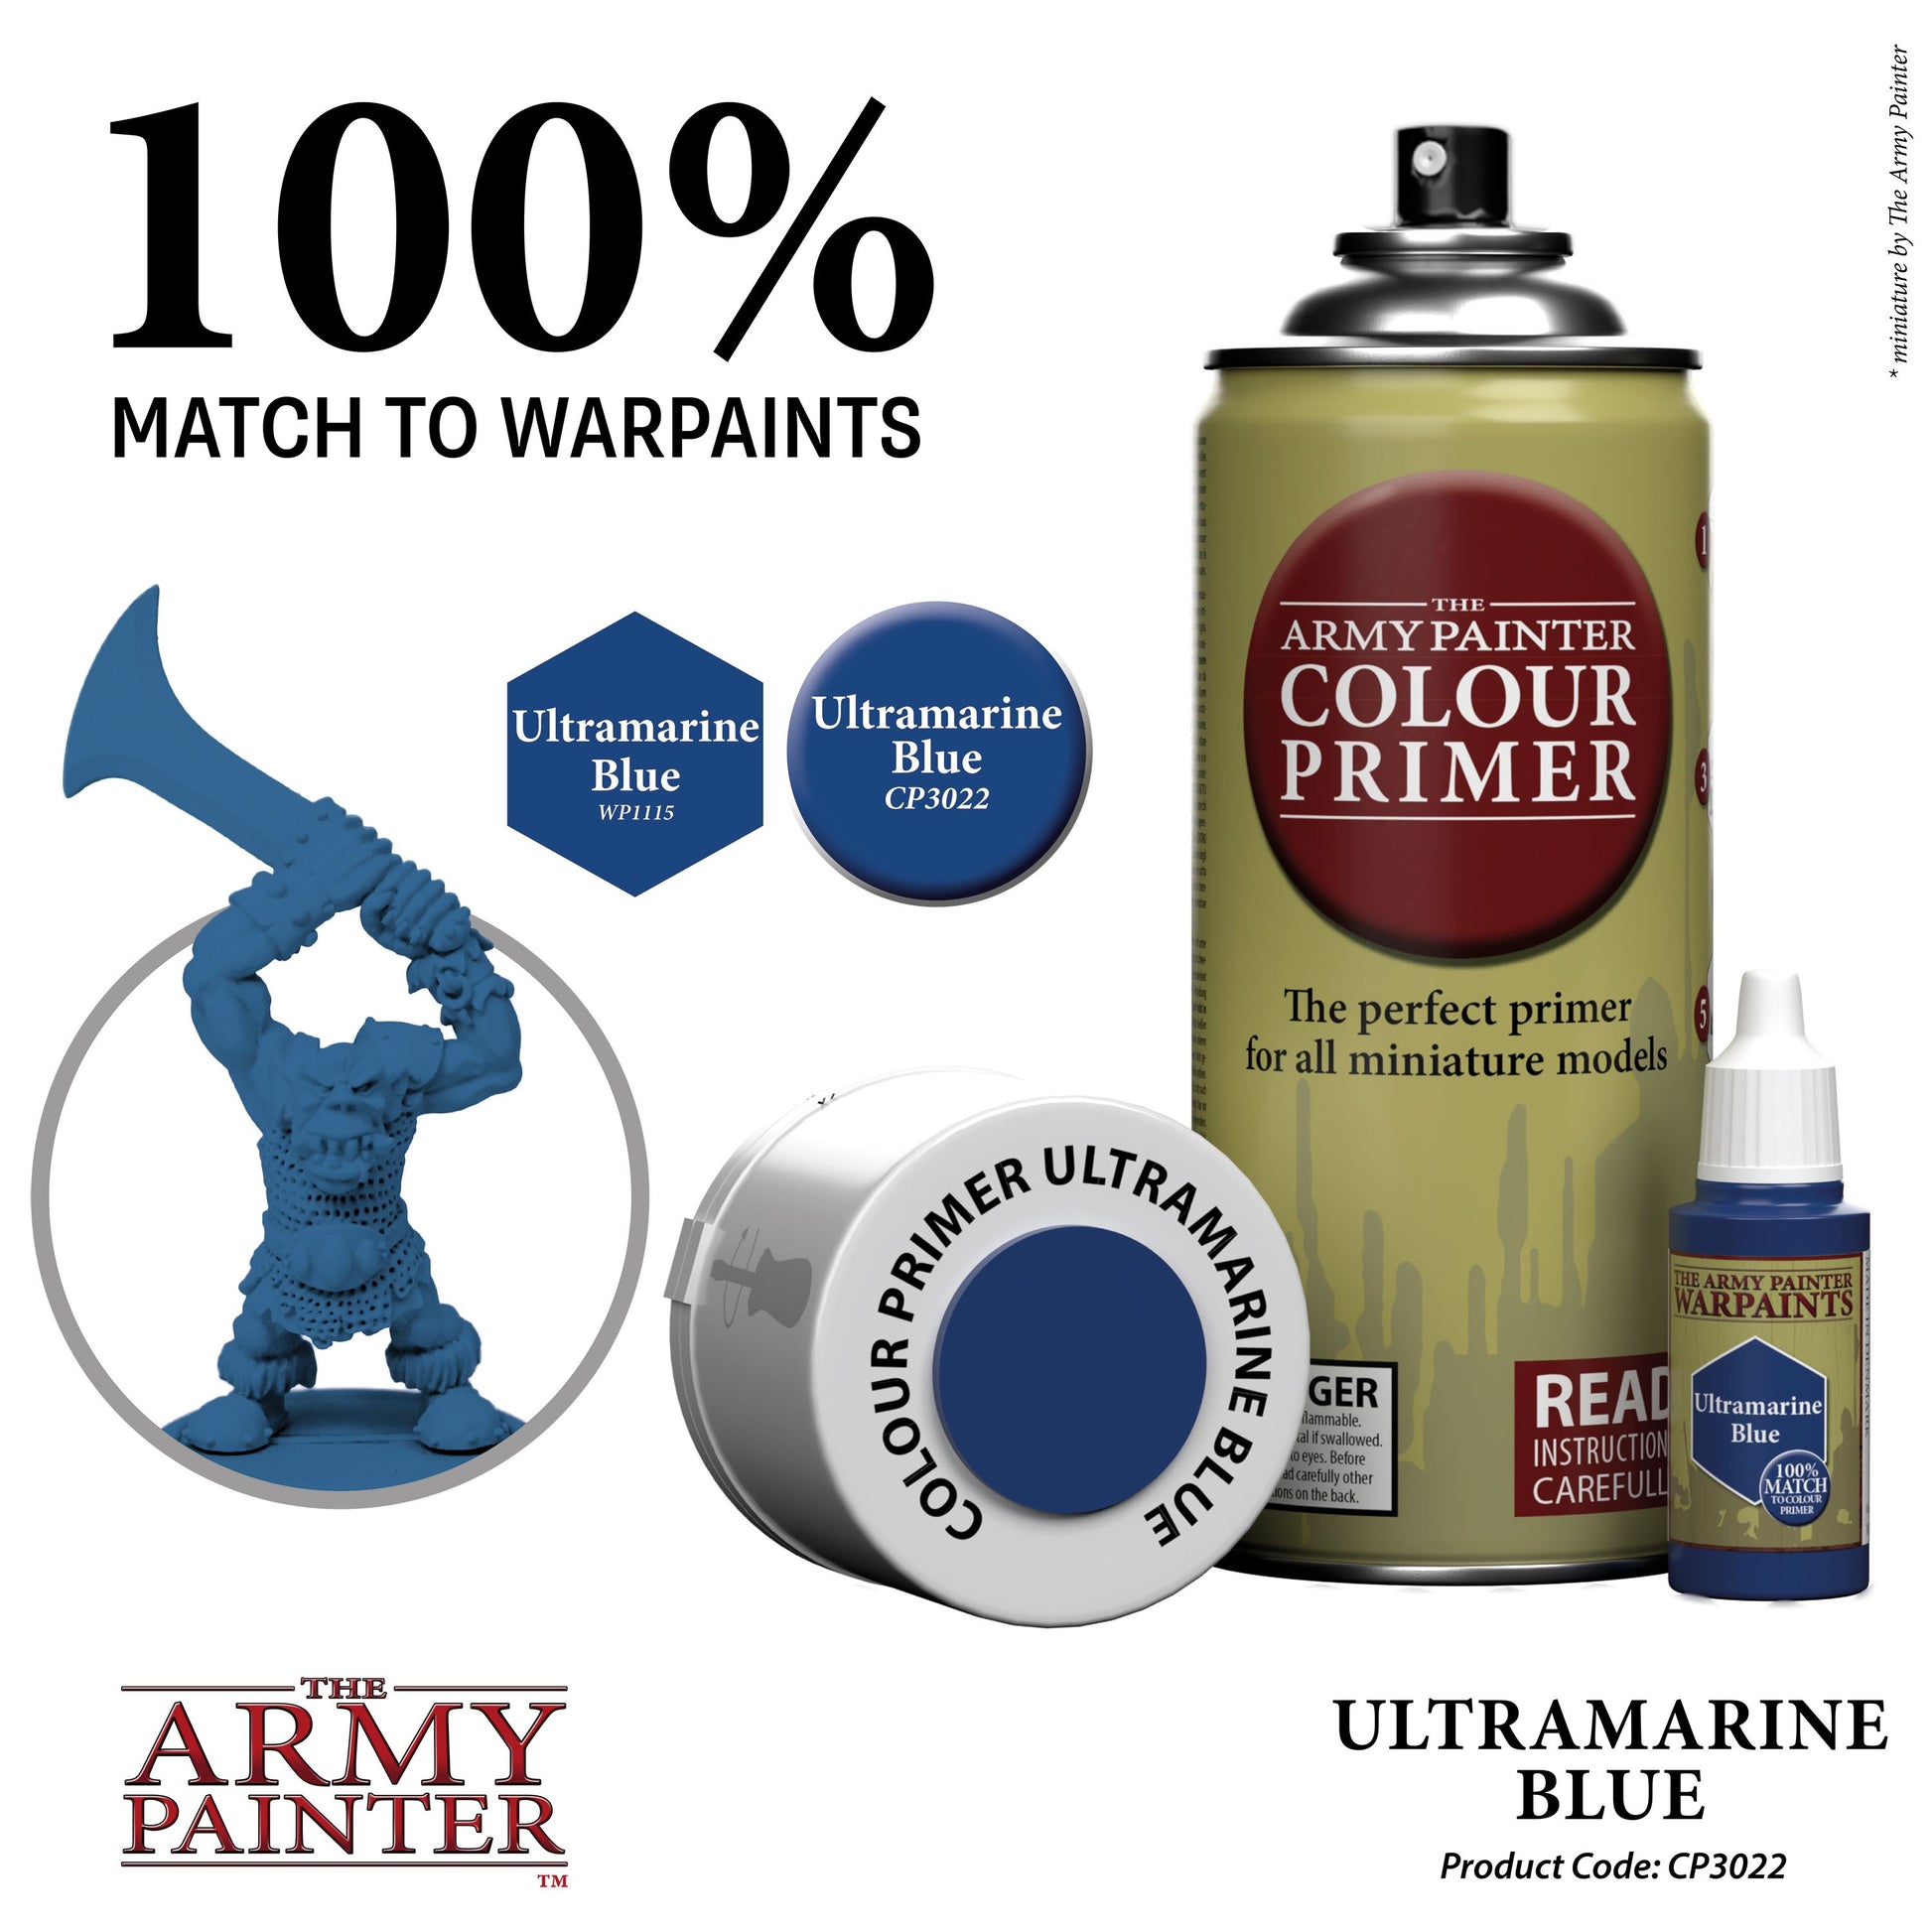 The Army Painter: Primer - Ultramarine Blue